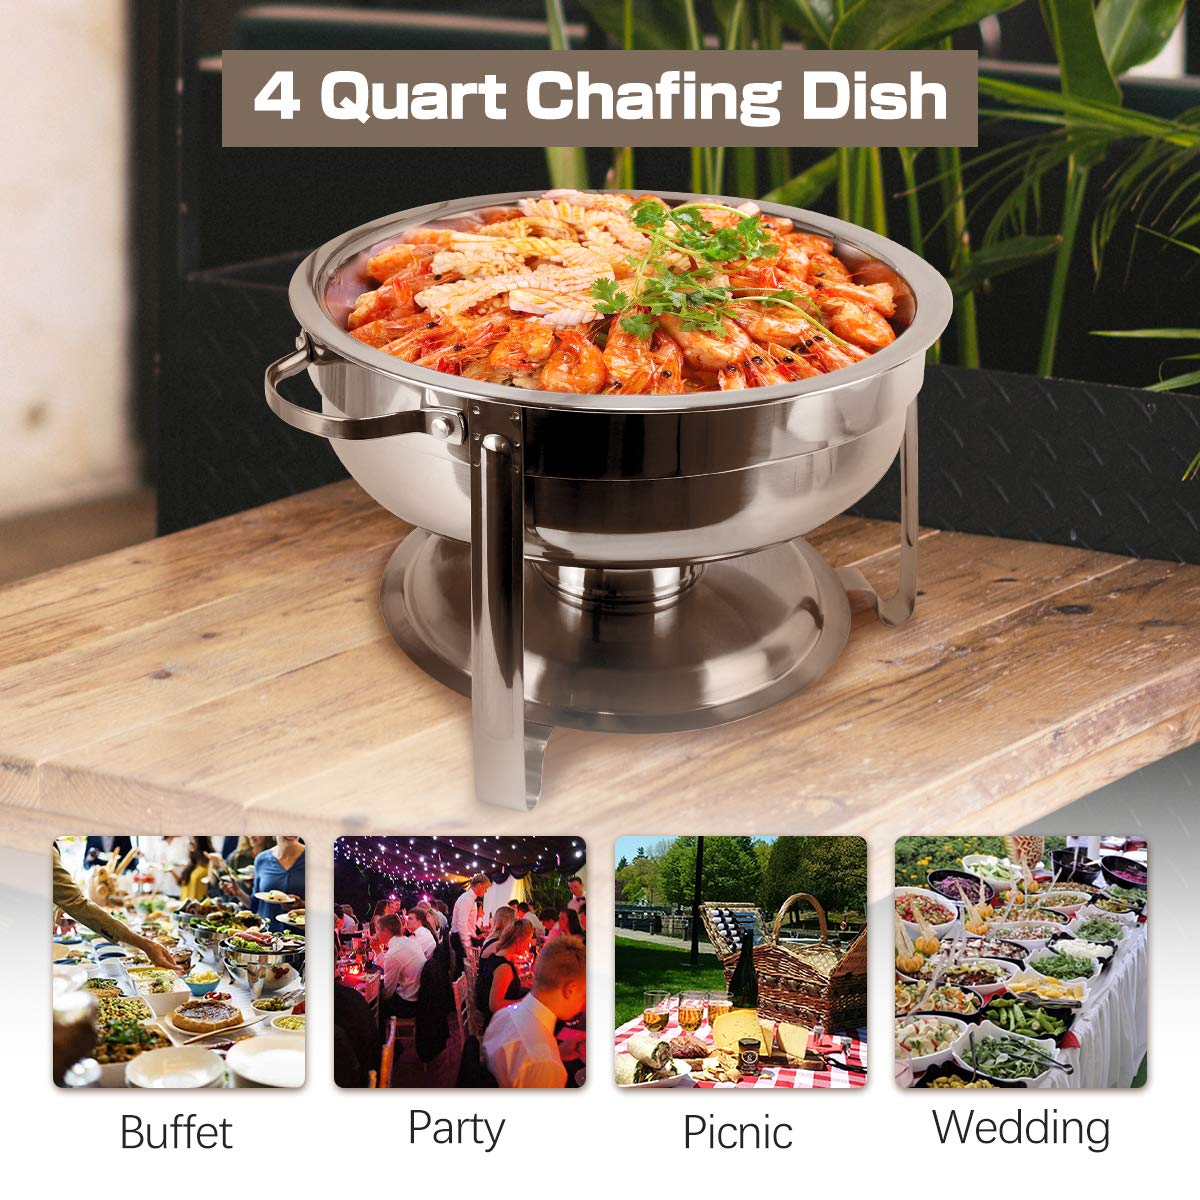 BriSunshine 2 Packs 4QT Stainless Steel Chafing Dish Buffet Set and 4 Packs 3 QT Chafing Dish Buffet Set Combo